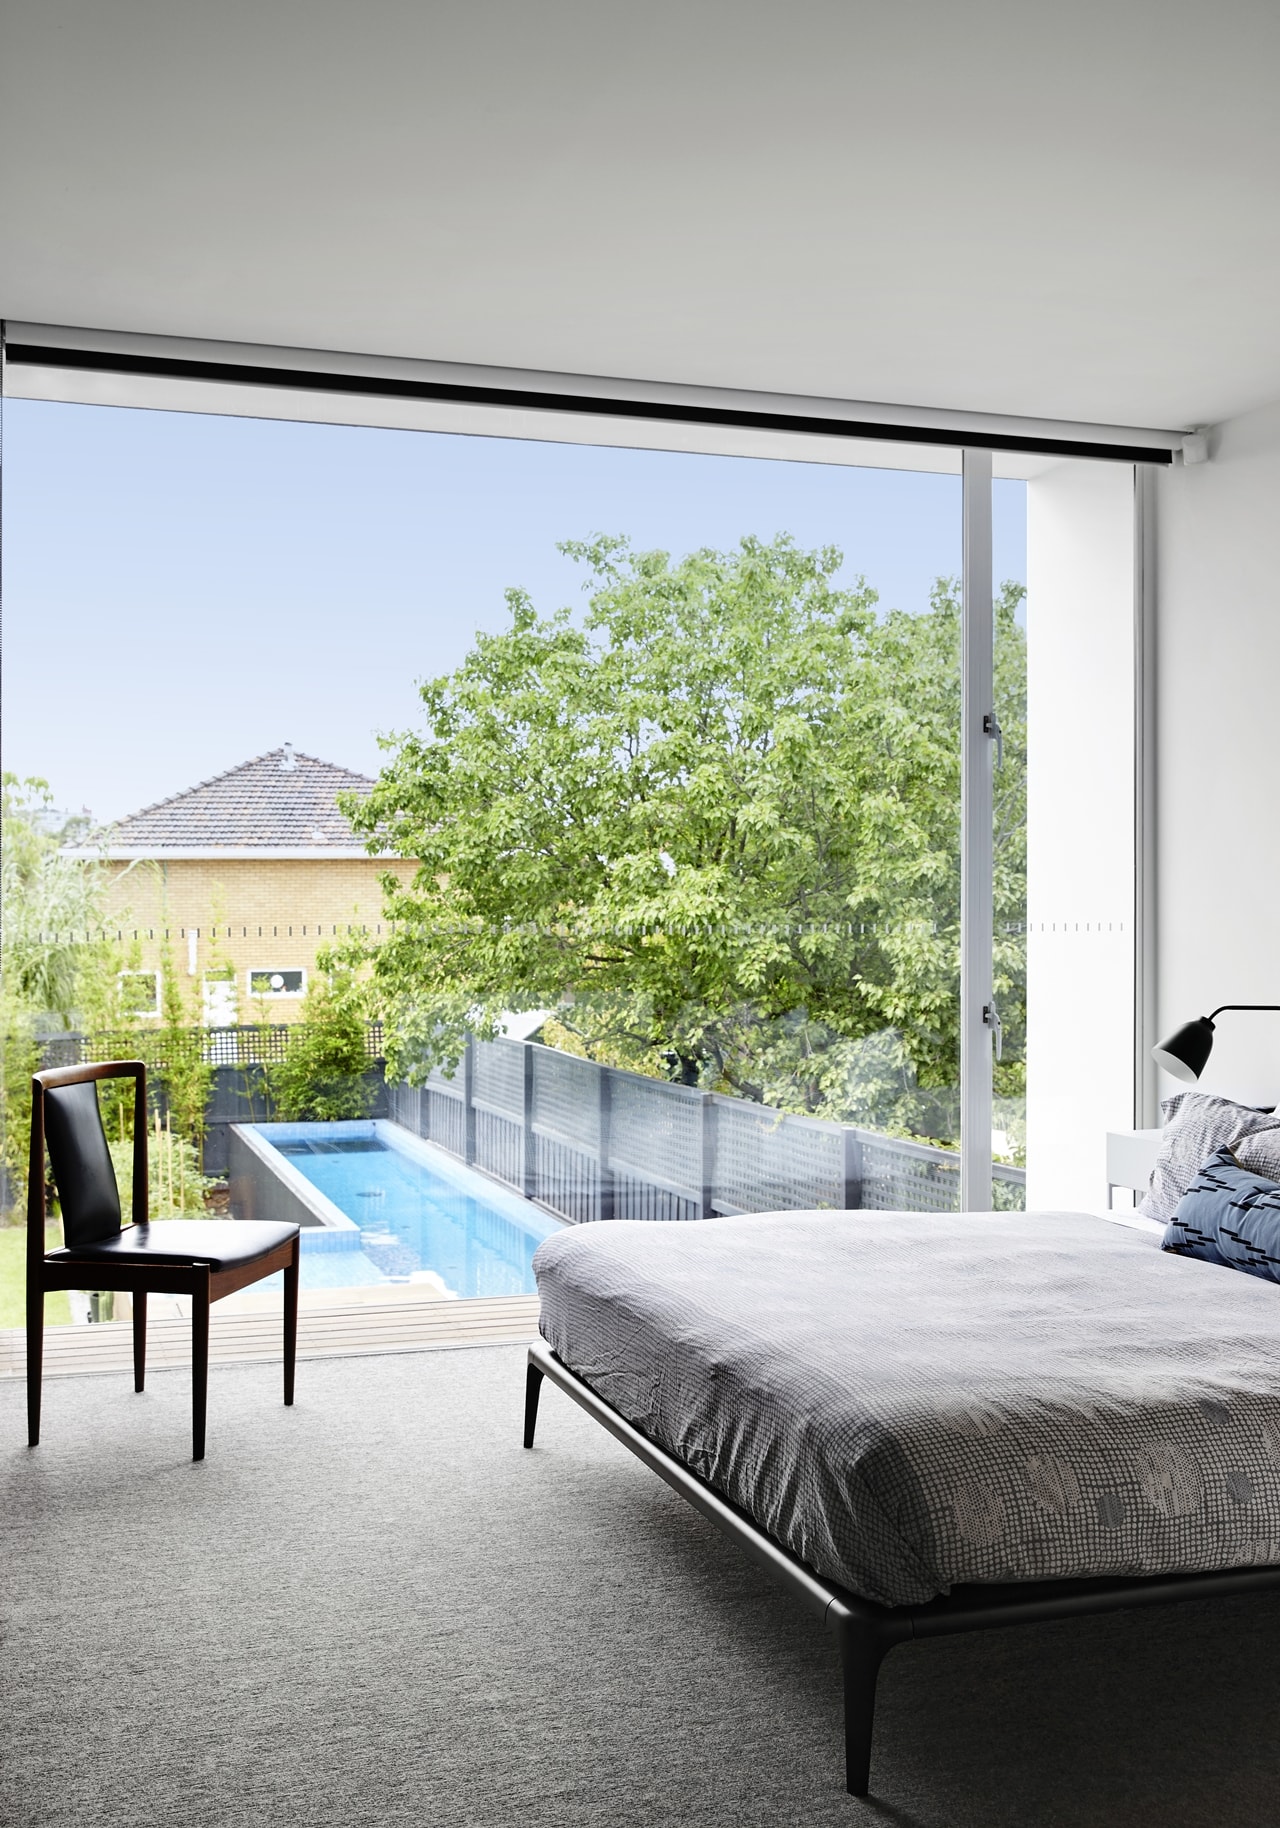 Bedroom glass wall by Austin Maynard Architects